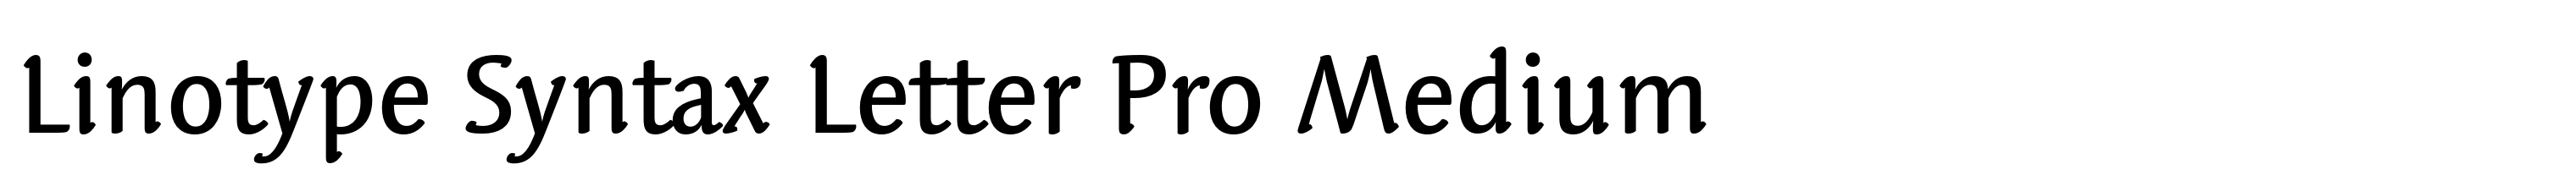 Linotype Syntax Letter Pro Medium